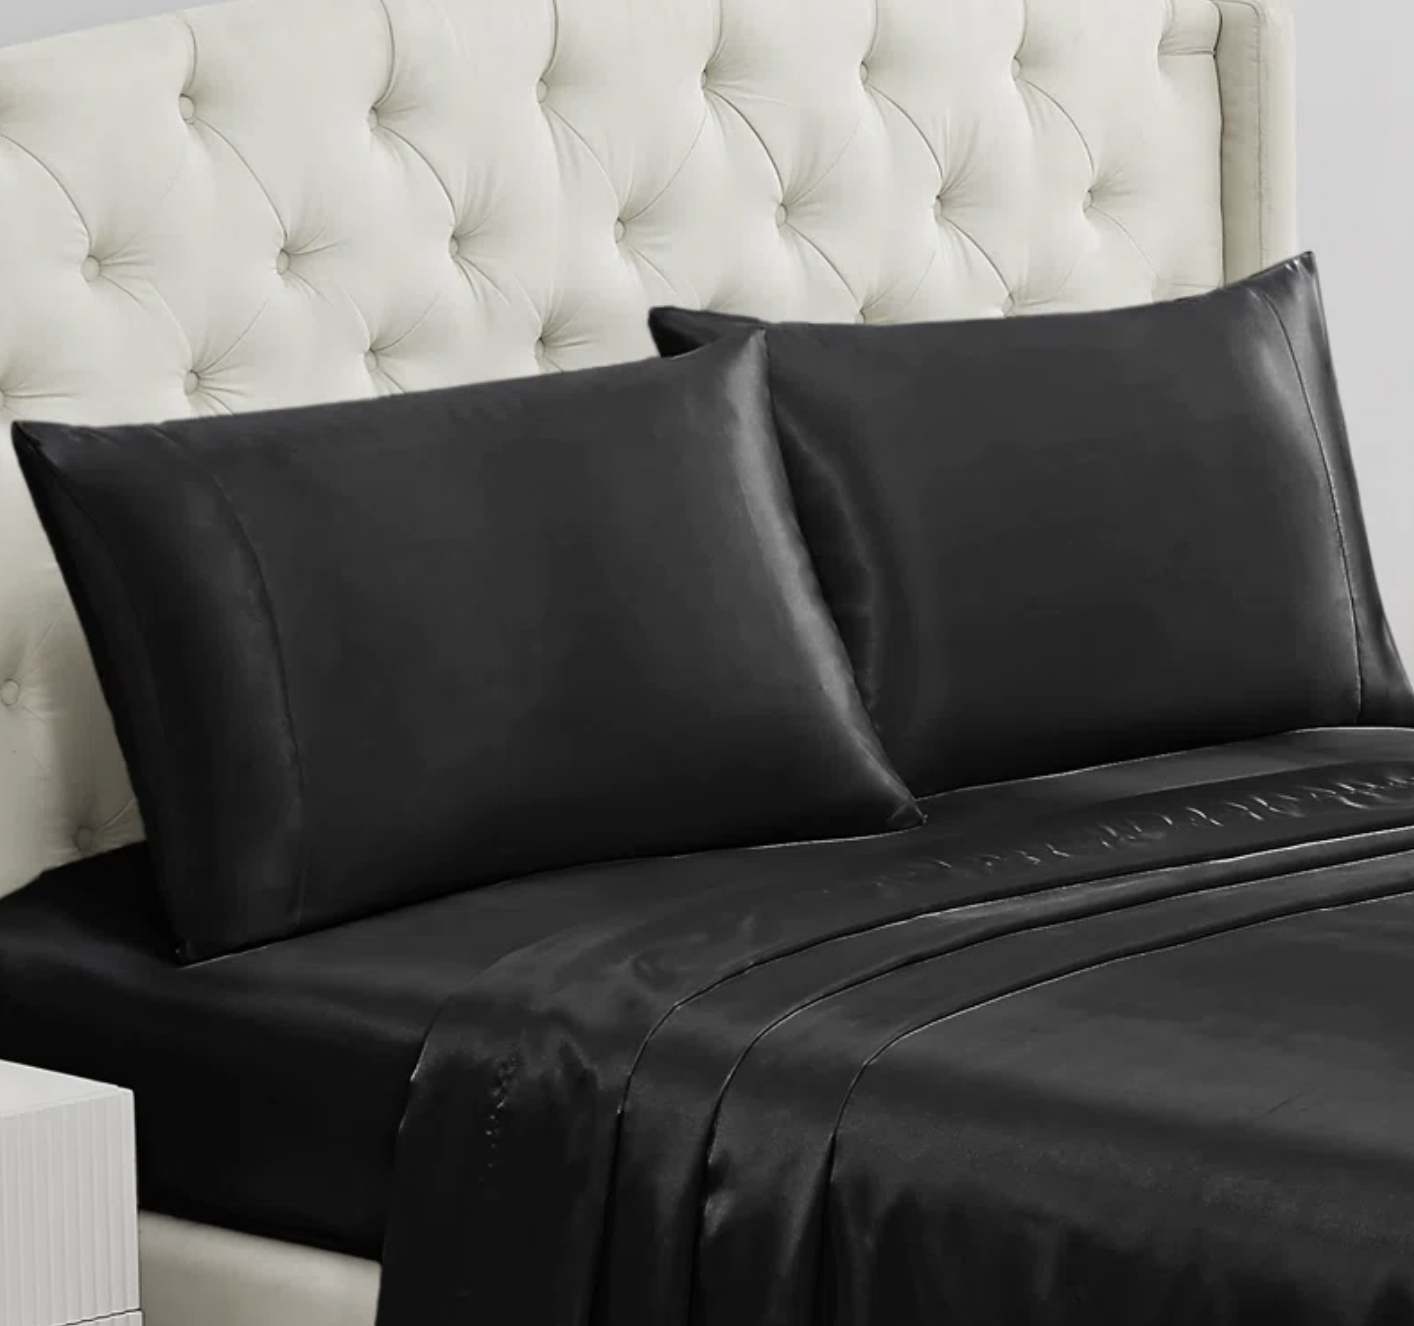 A set of black satin pillowcases